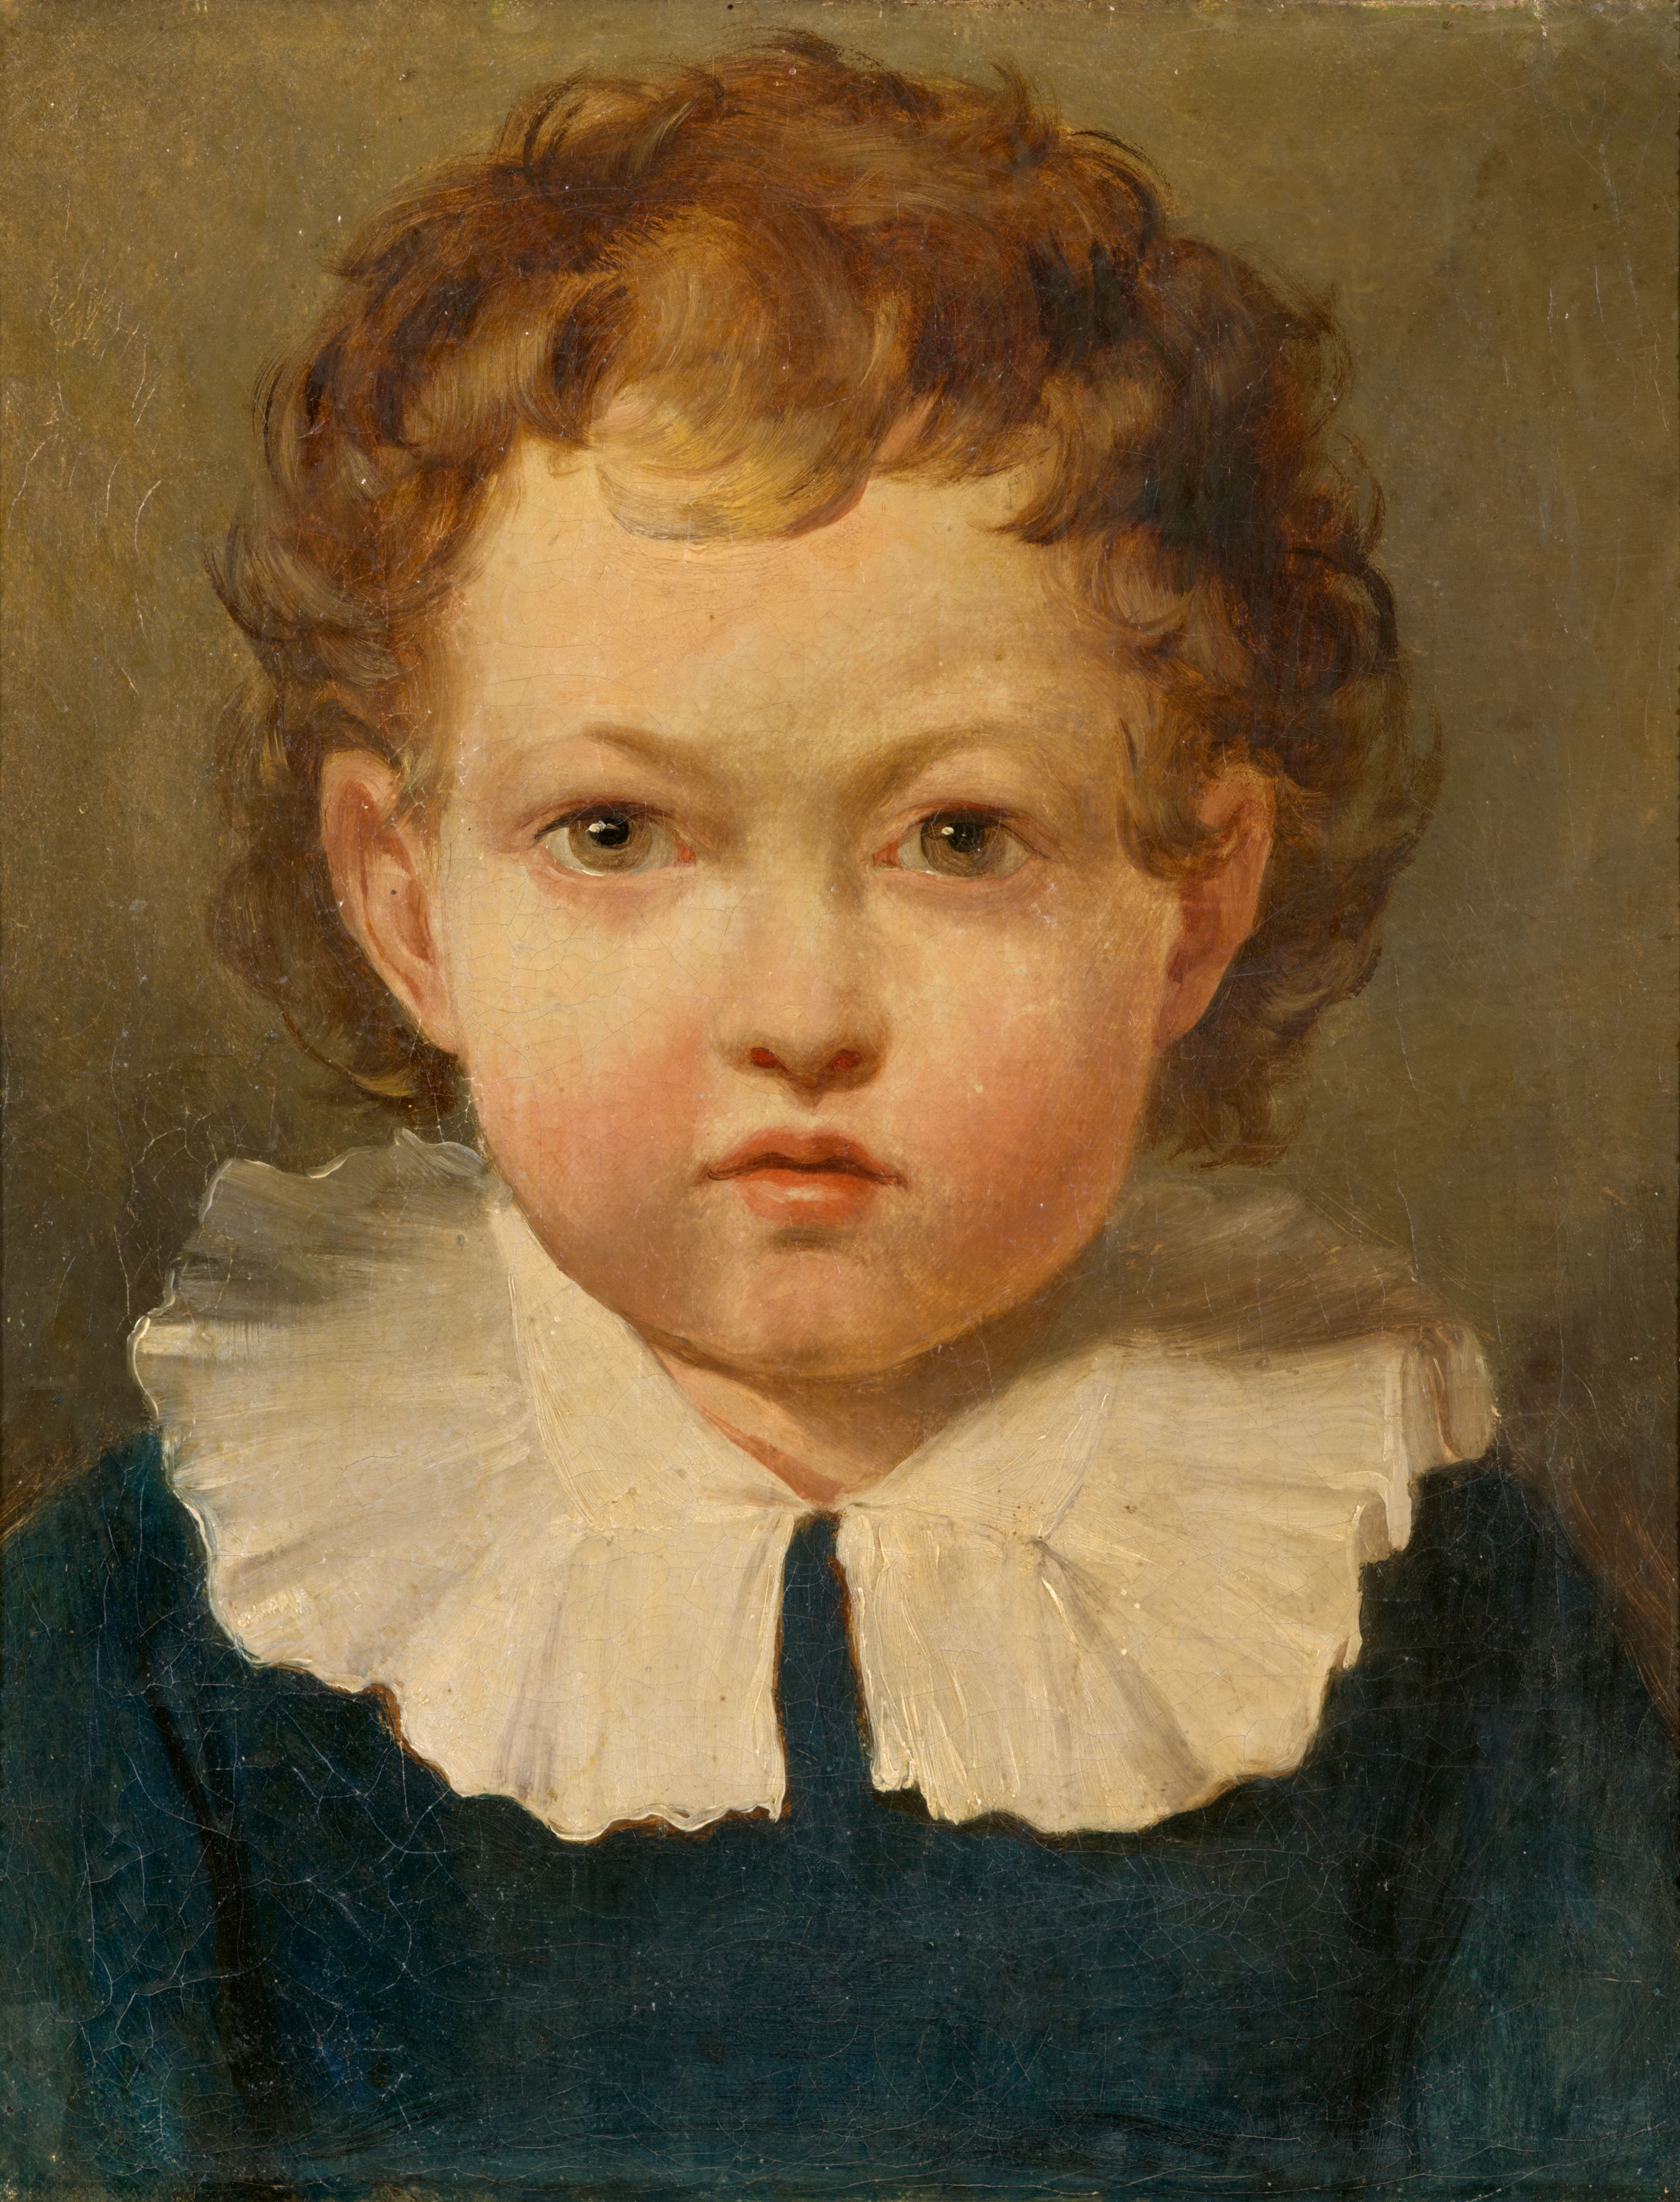 Portrait of a Boy by German School, 19th Century, around 1820